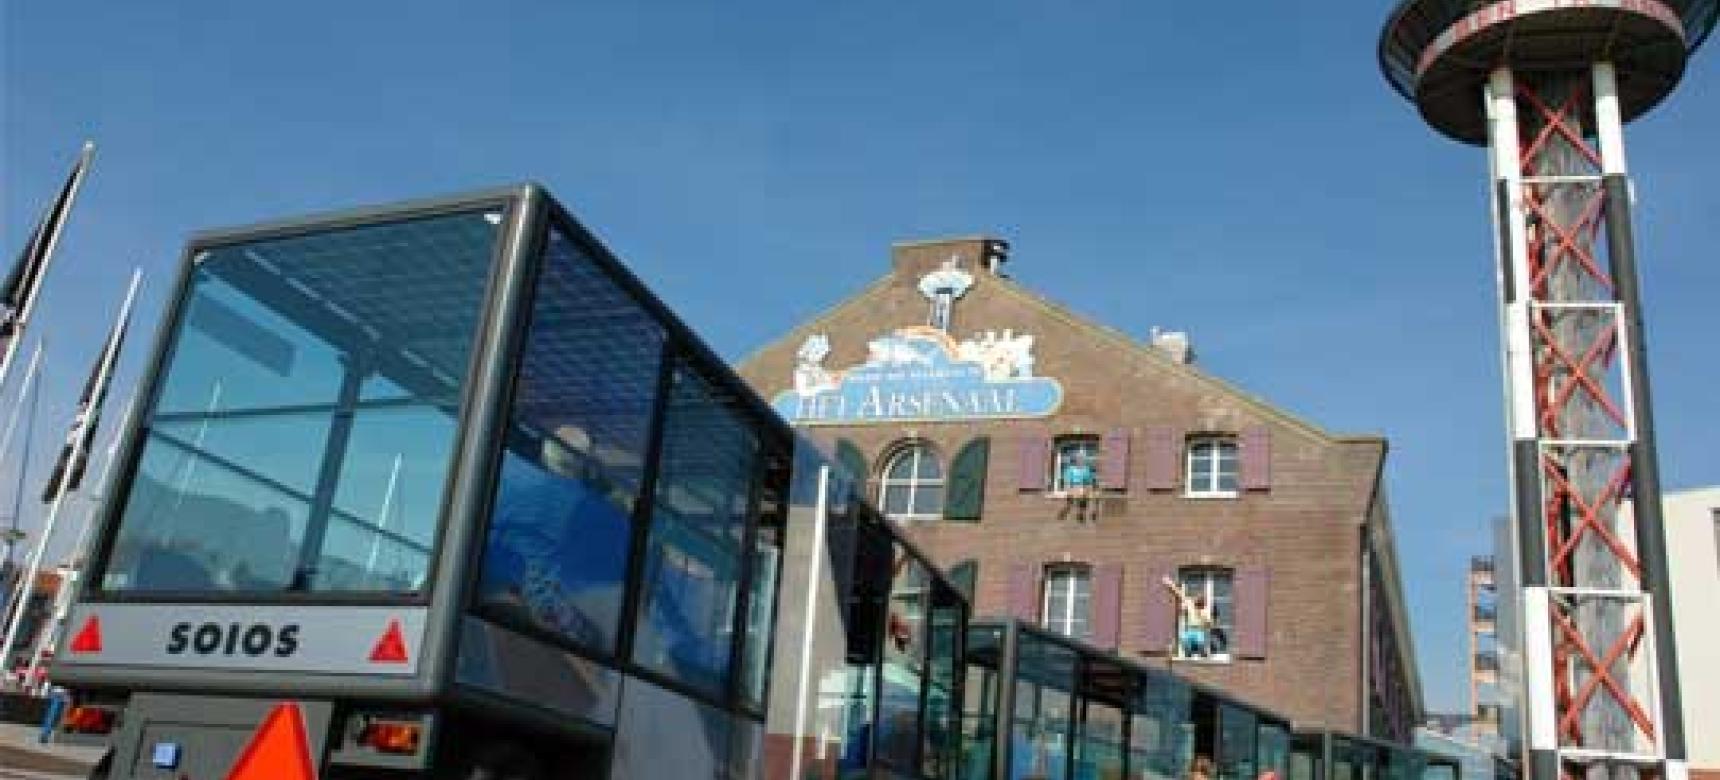 Halte Arsenaal van de Zonnetrein (zonnetreinzeeland.nl)